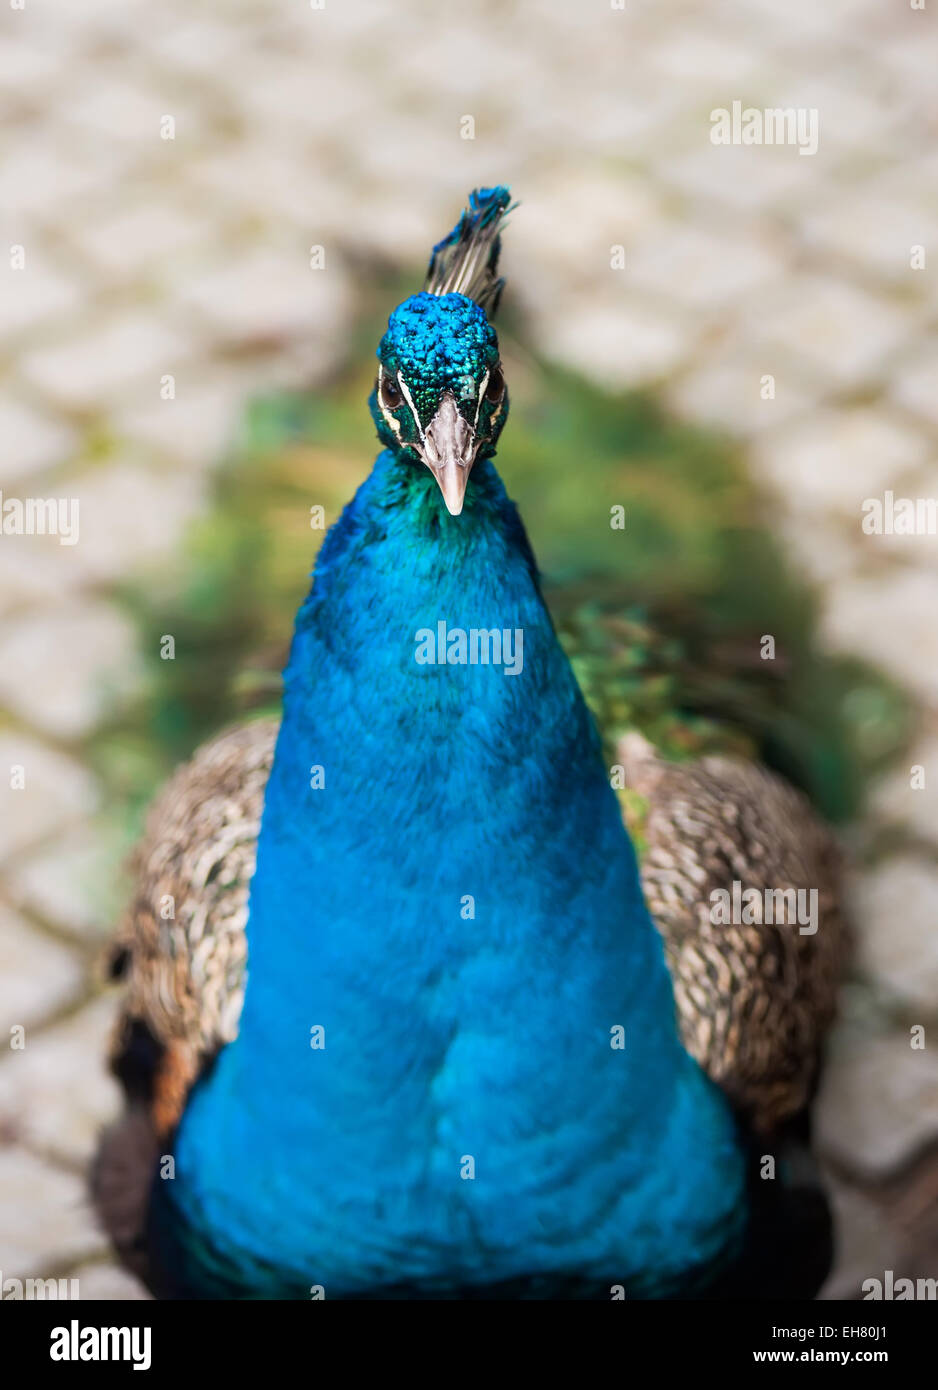 Peafowl or peacock: Bird of Juno. Animal life of Asia Stock Photo